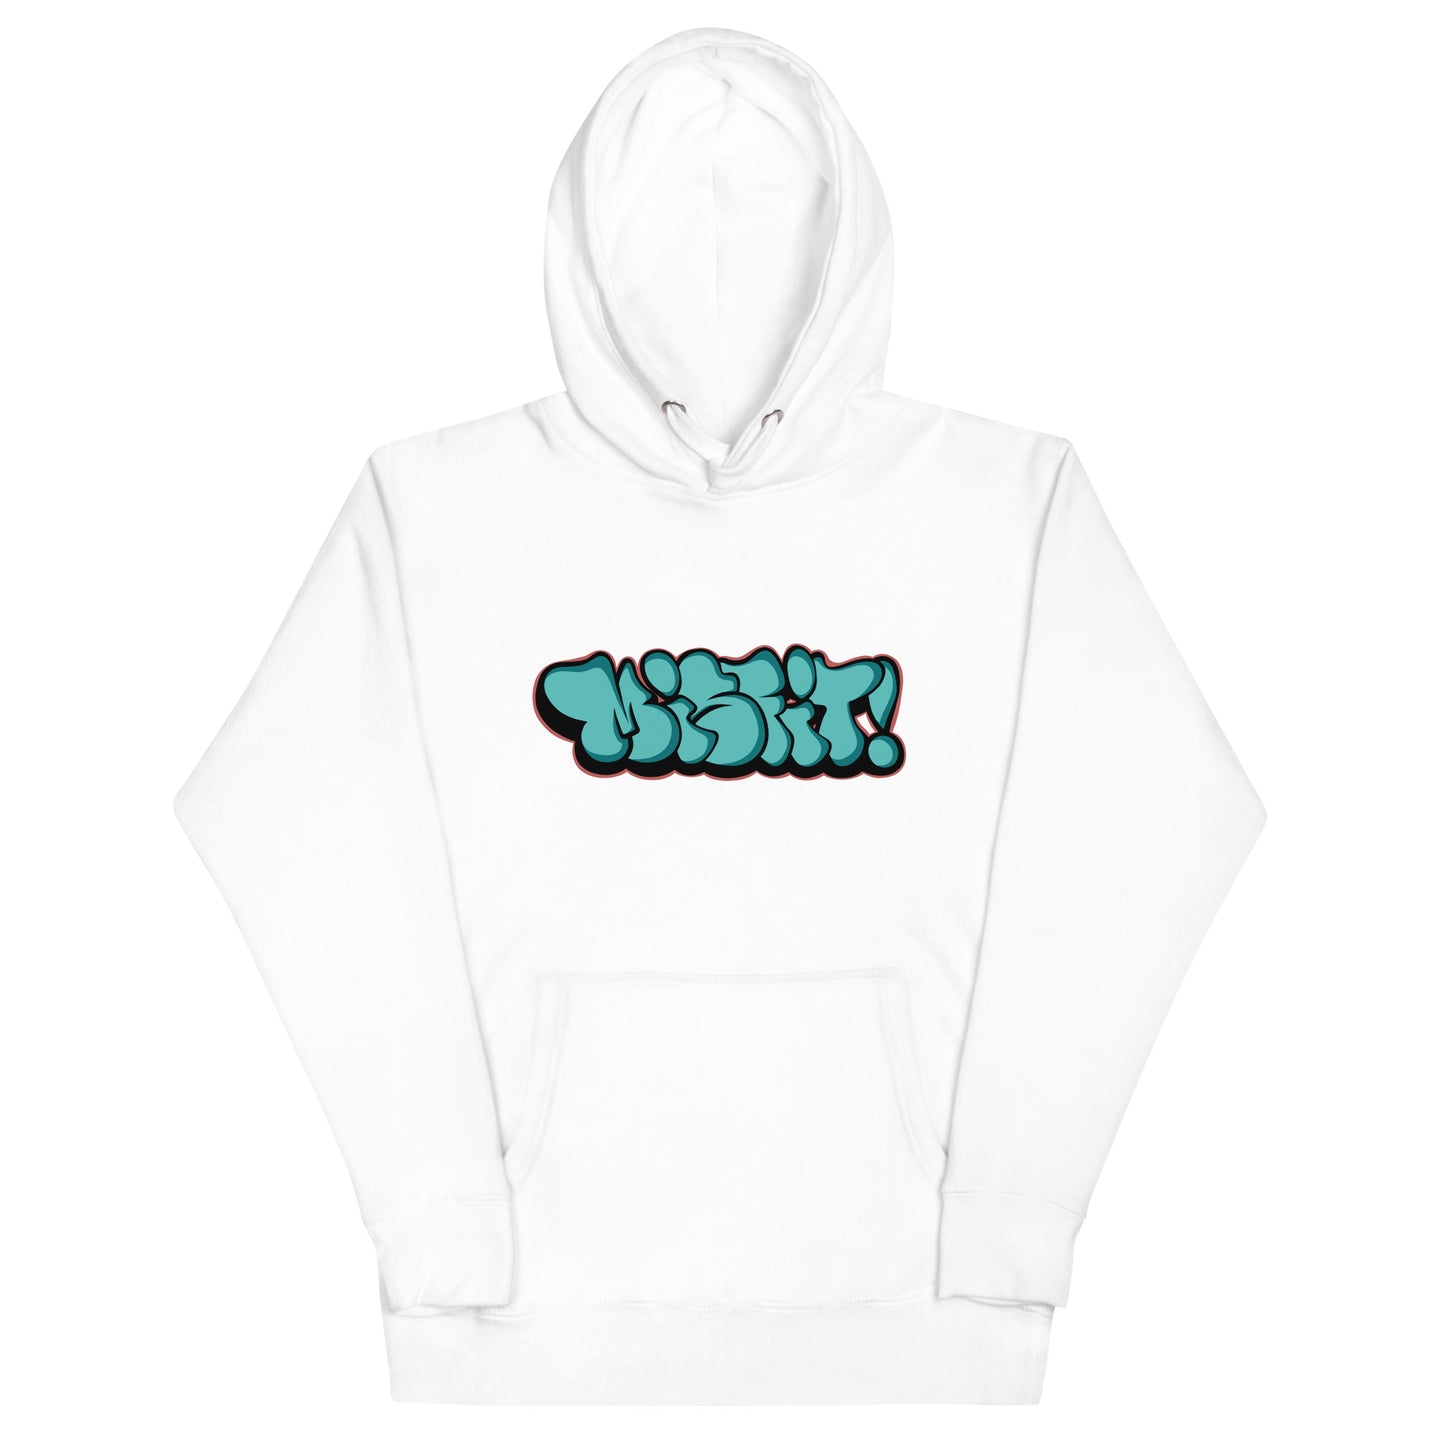 Misfit throwie hoodie by B.Different Clothing street art graffiti inspired streetwear brand